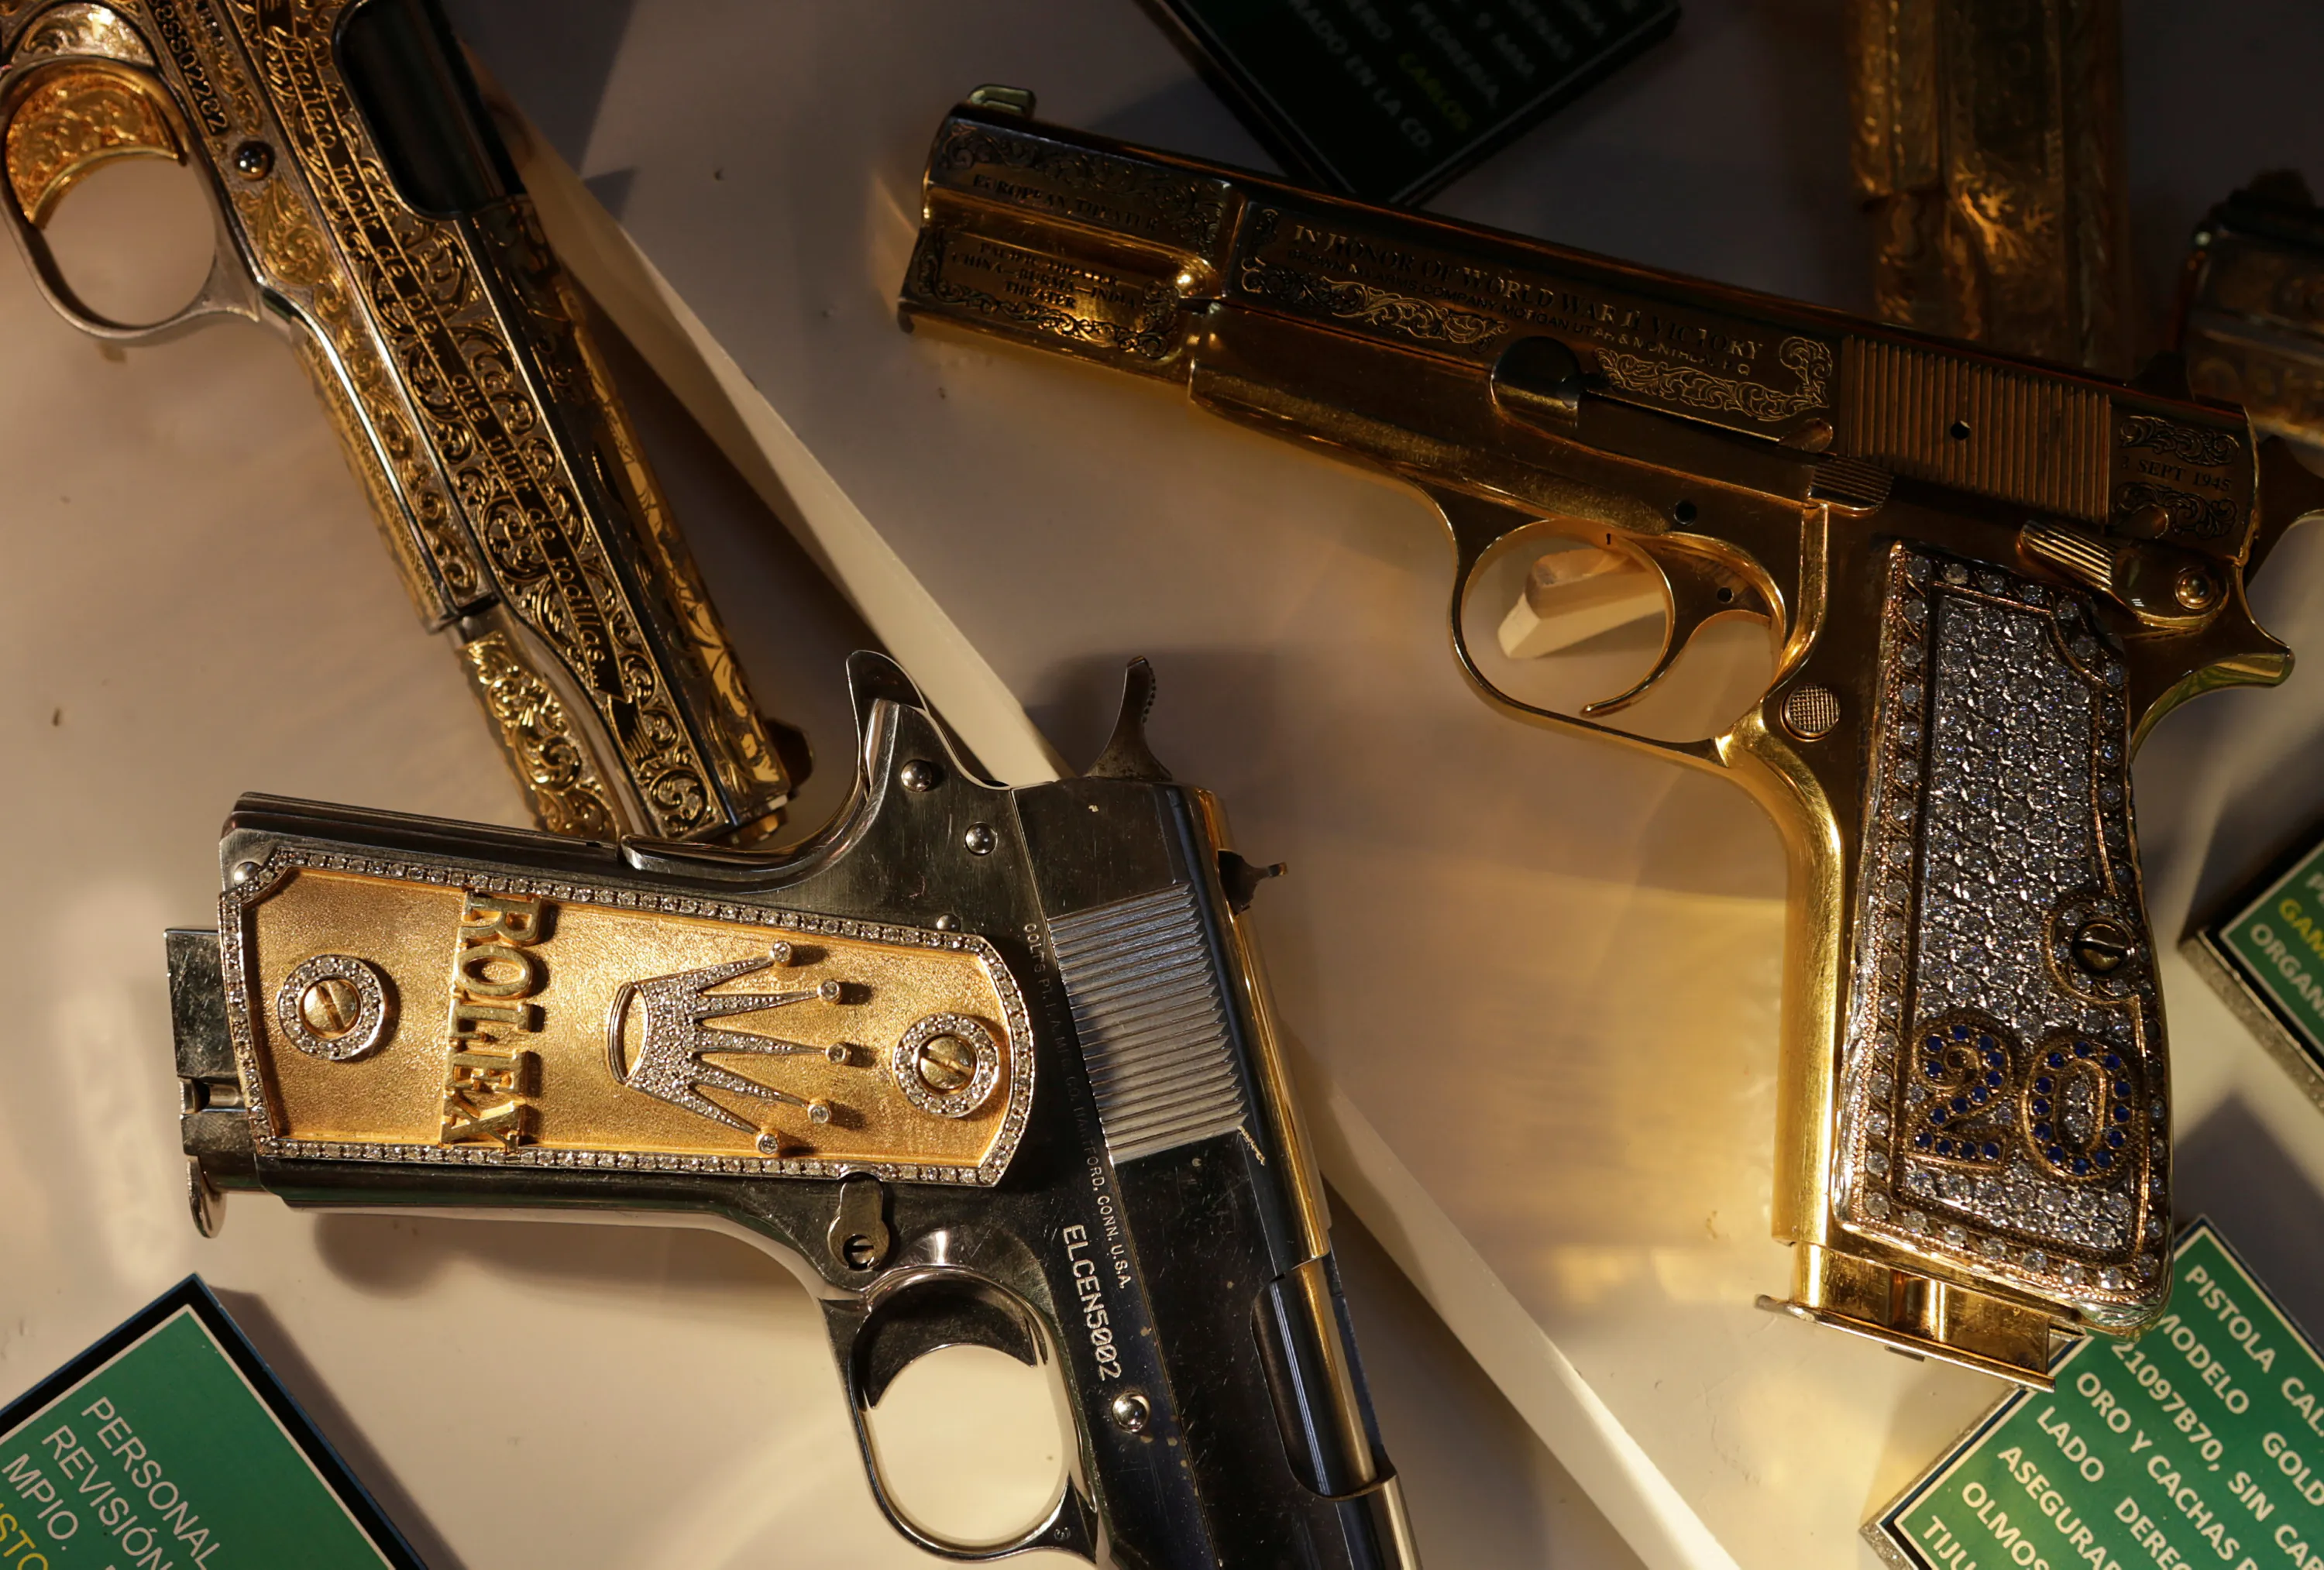 Gold guns. Colt 1911 наркобаронов. Золотое оружие наркобаронов. Оружие мексиканских наркобаронов. Мексиканский Картель золотое оружие.